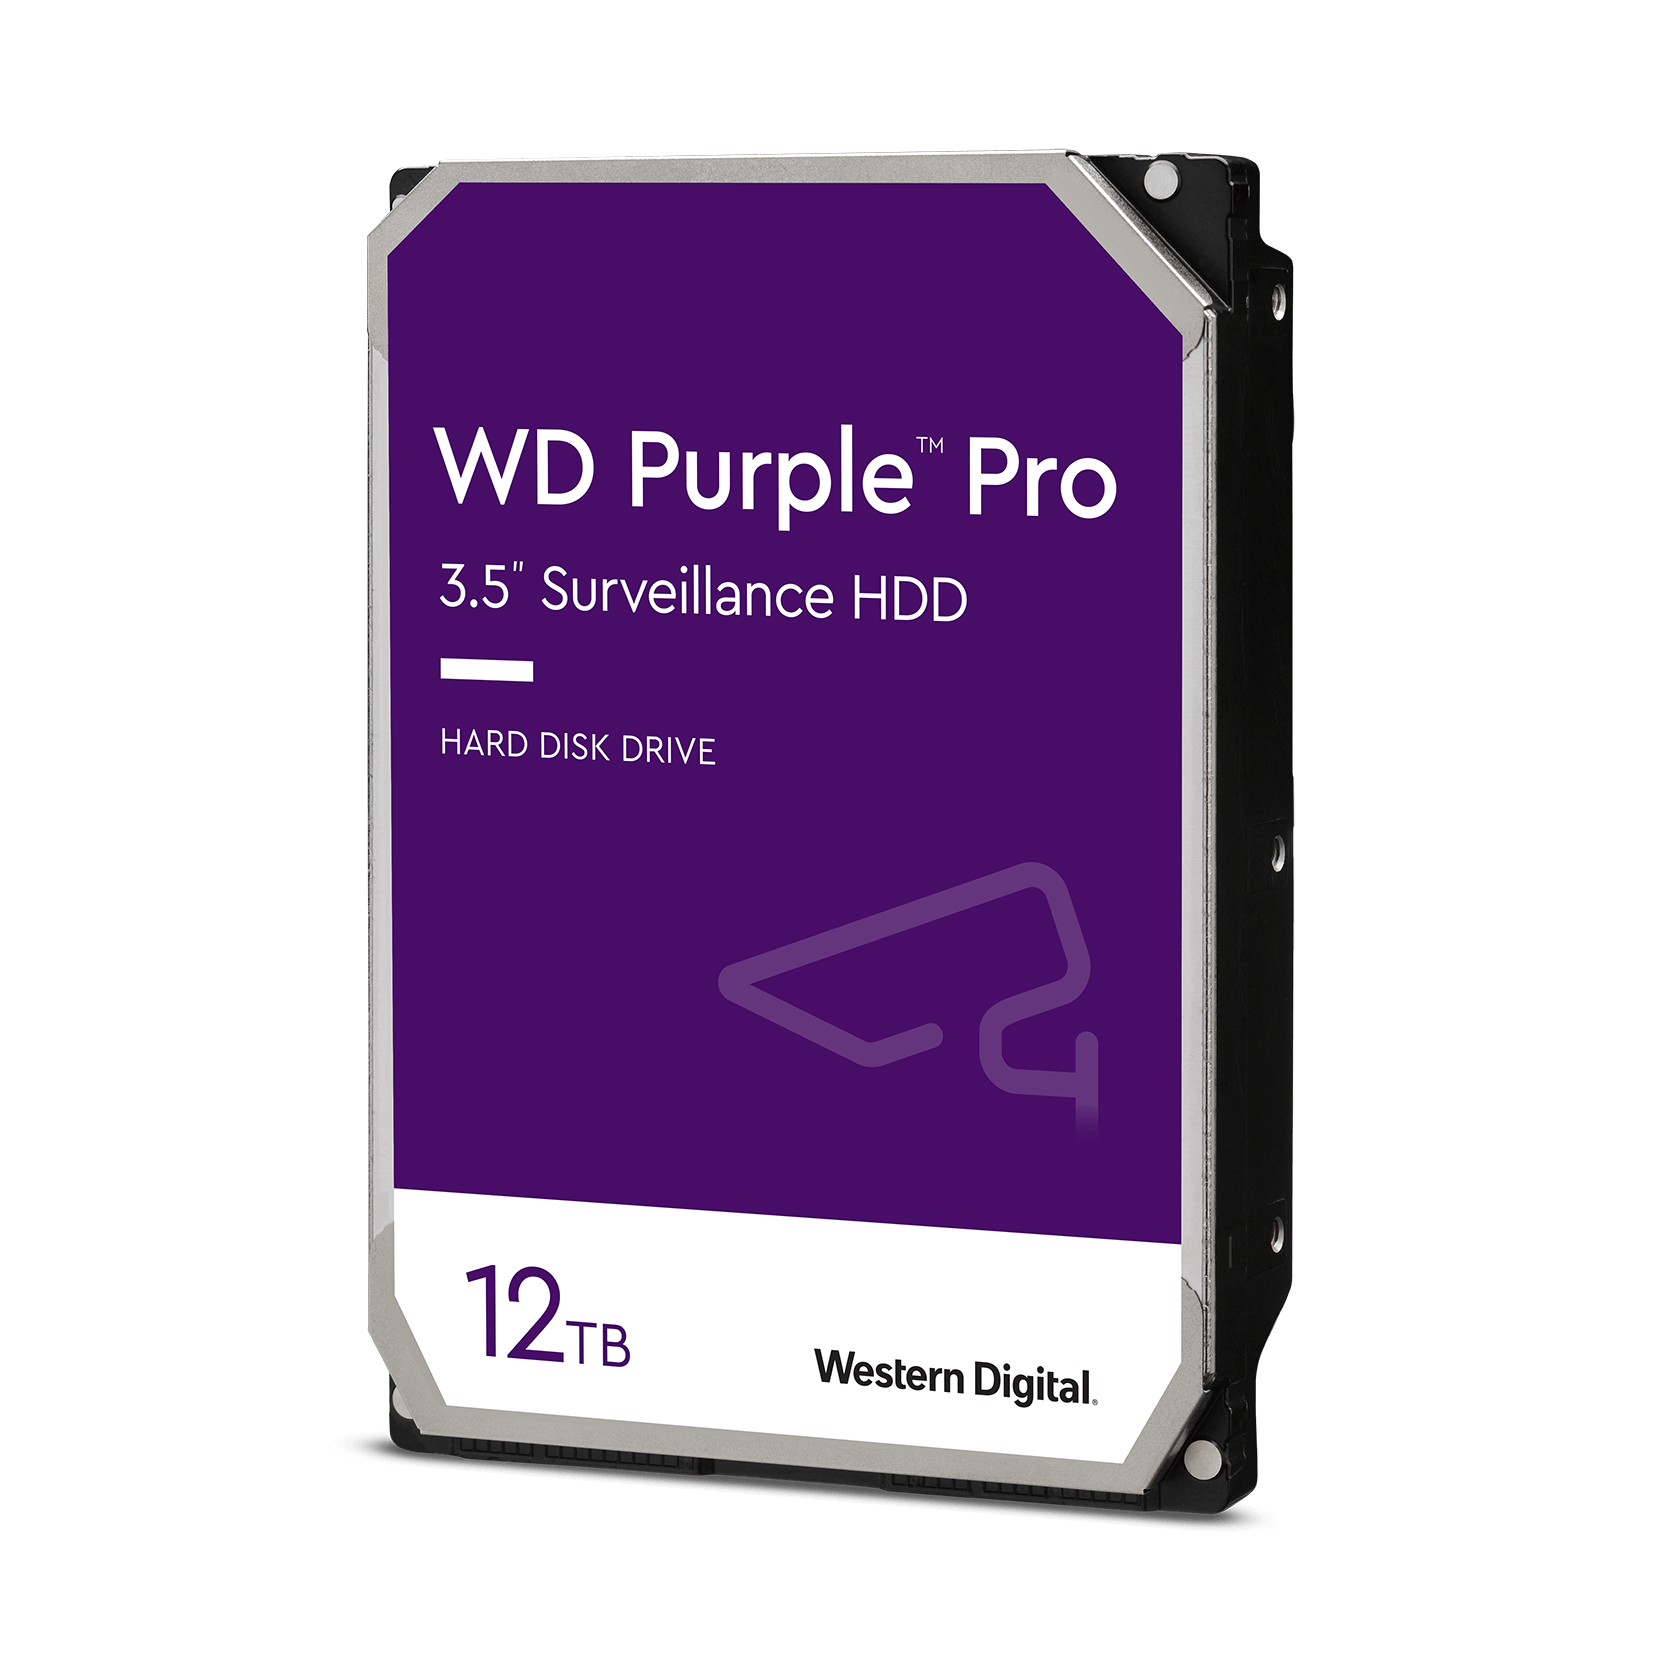 Western Digital 12TB WD Pro - Surveillance, Purple - WD121PURP